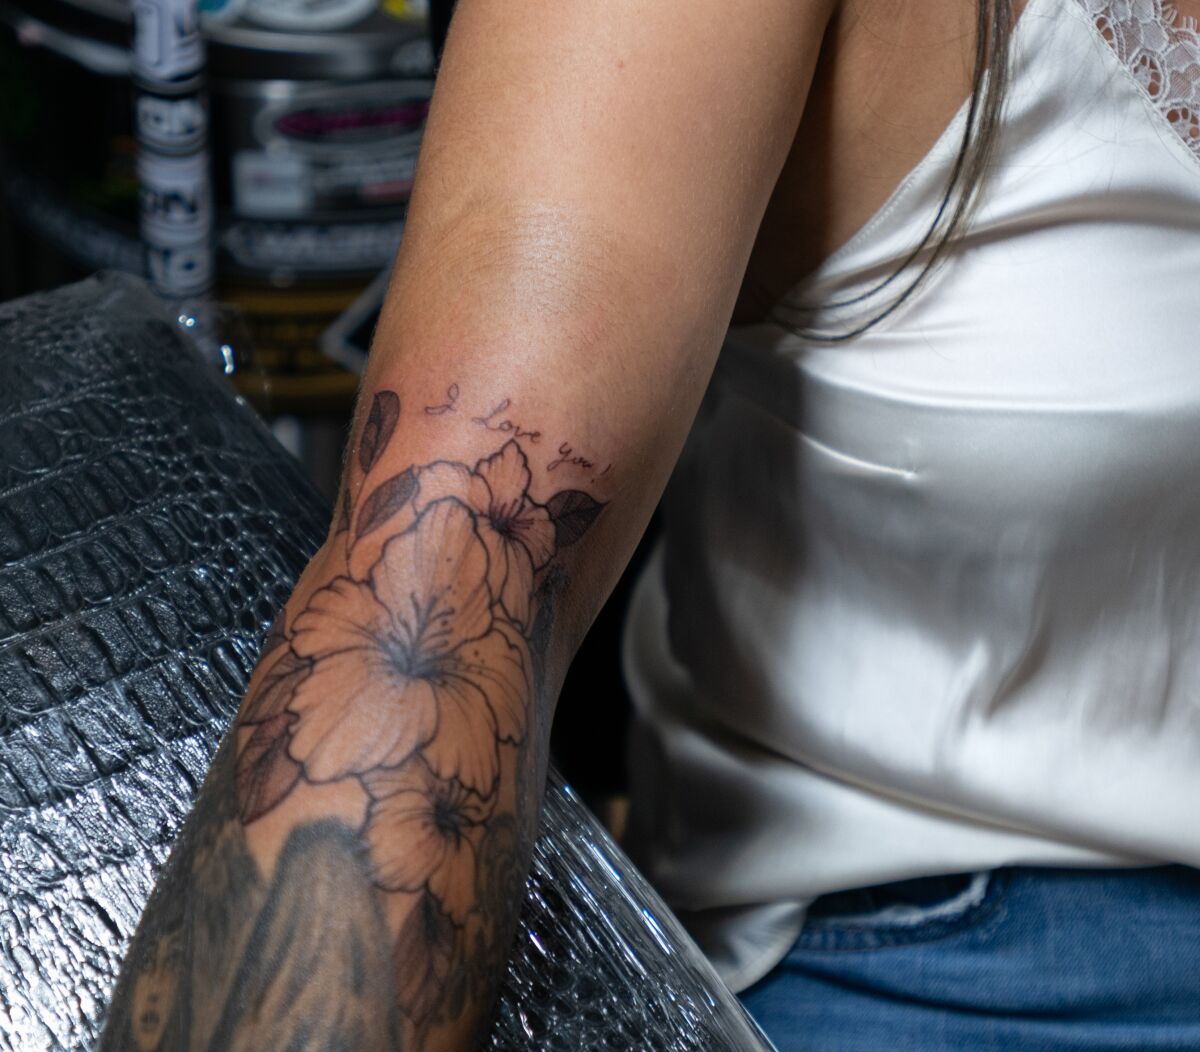 A close-up view of the memorial tattoo on Sazalea Martinez's arm.